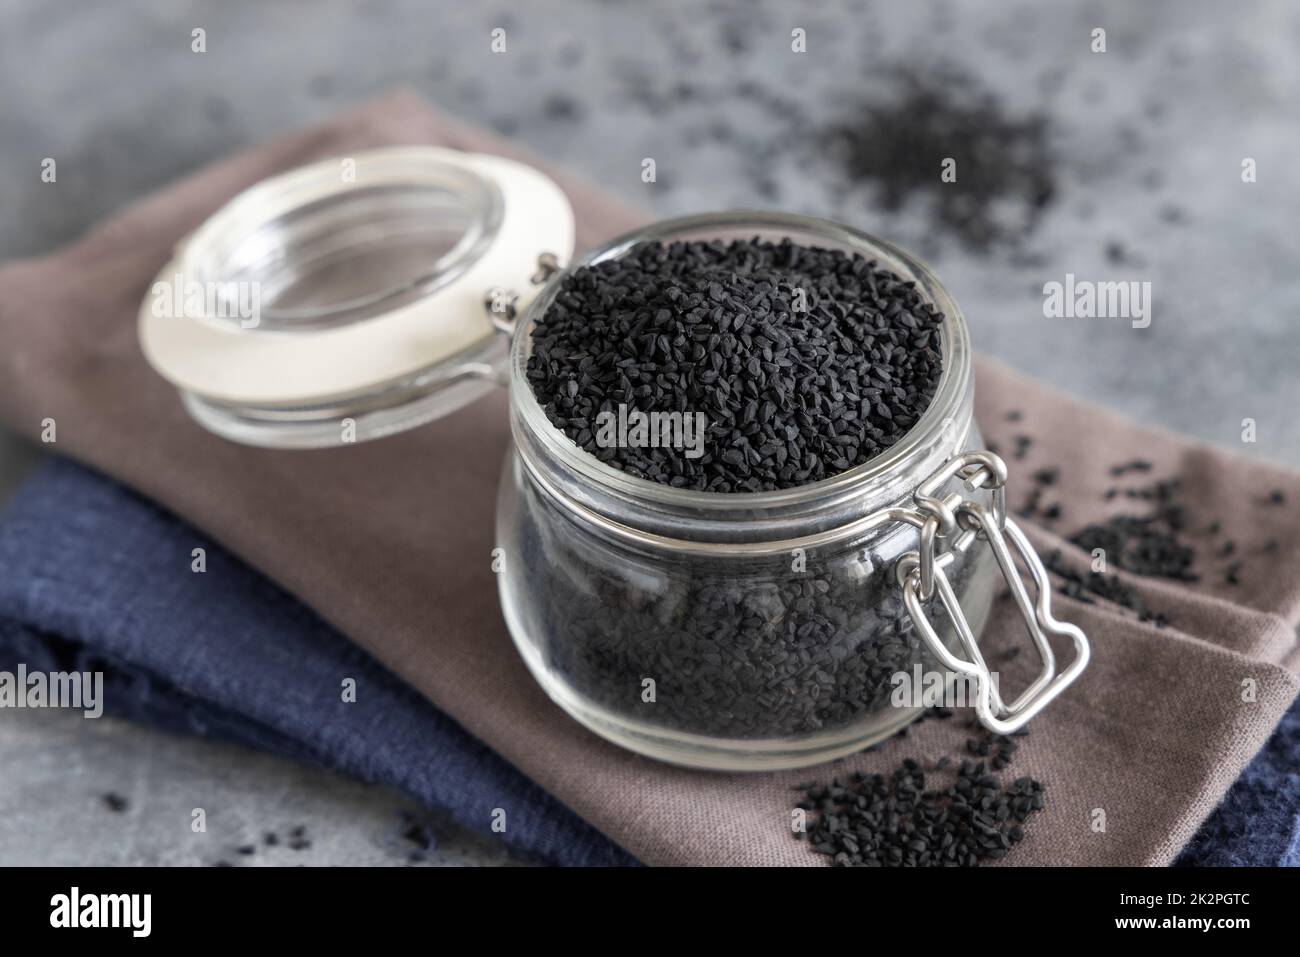 Indian spice Black cumin (nigella sativa or kalonji) seeds in glass jar close up Stock Photo